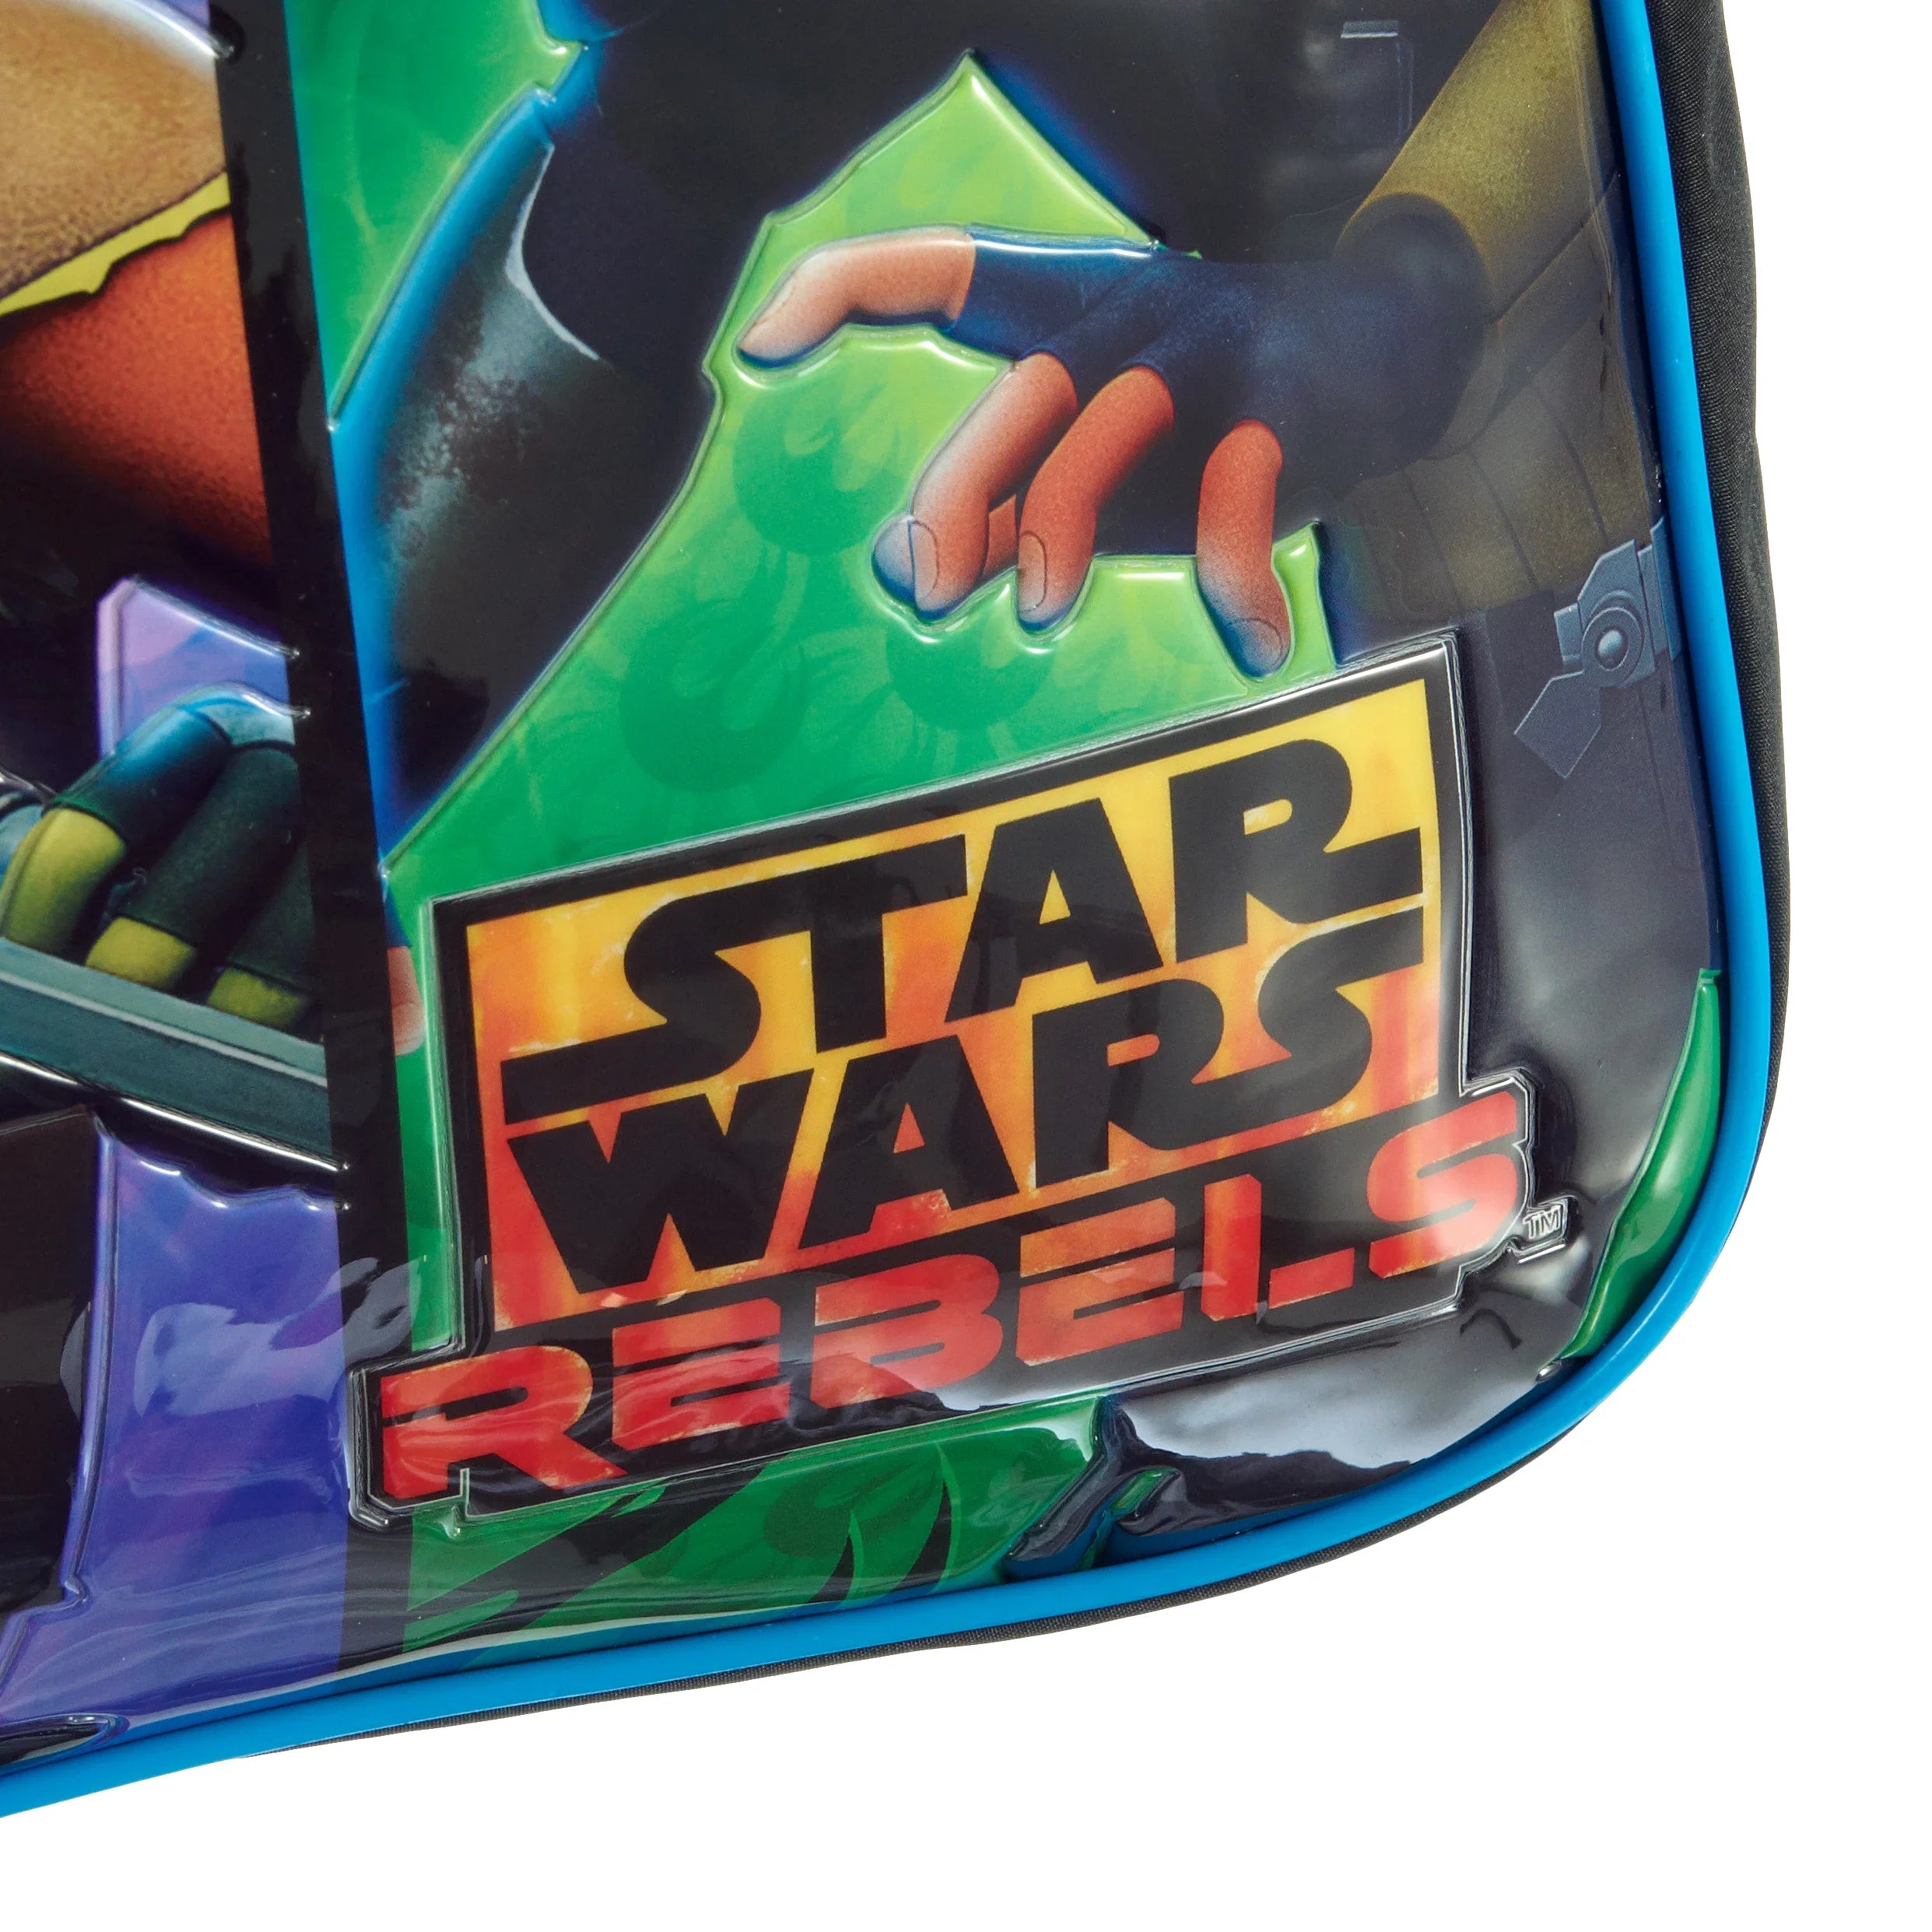 Disney Star Wars Rebels Reisetasche 40 cm - bunt